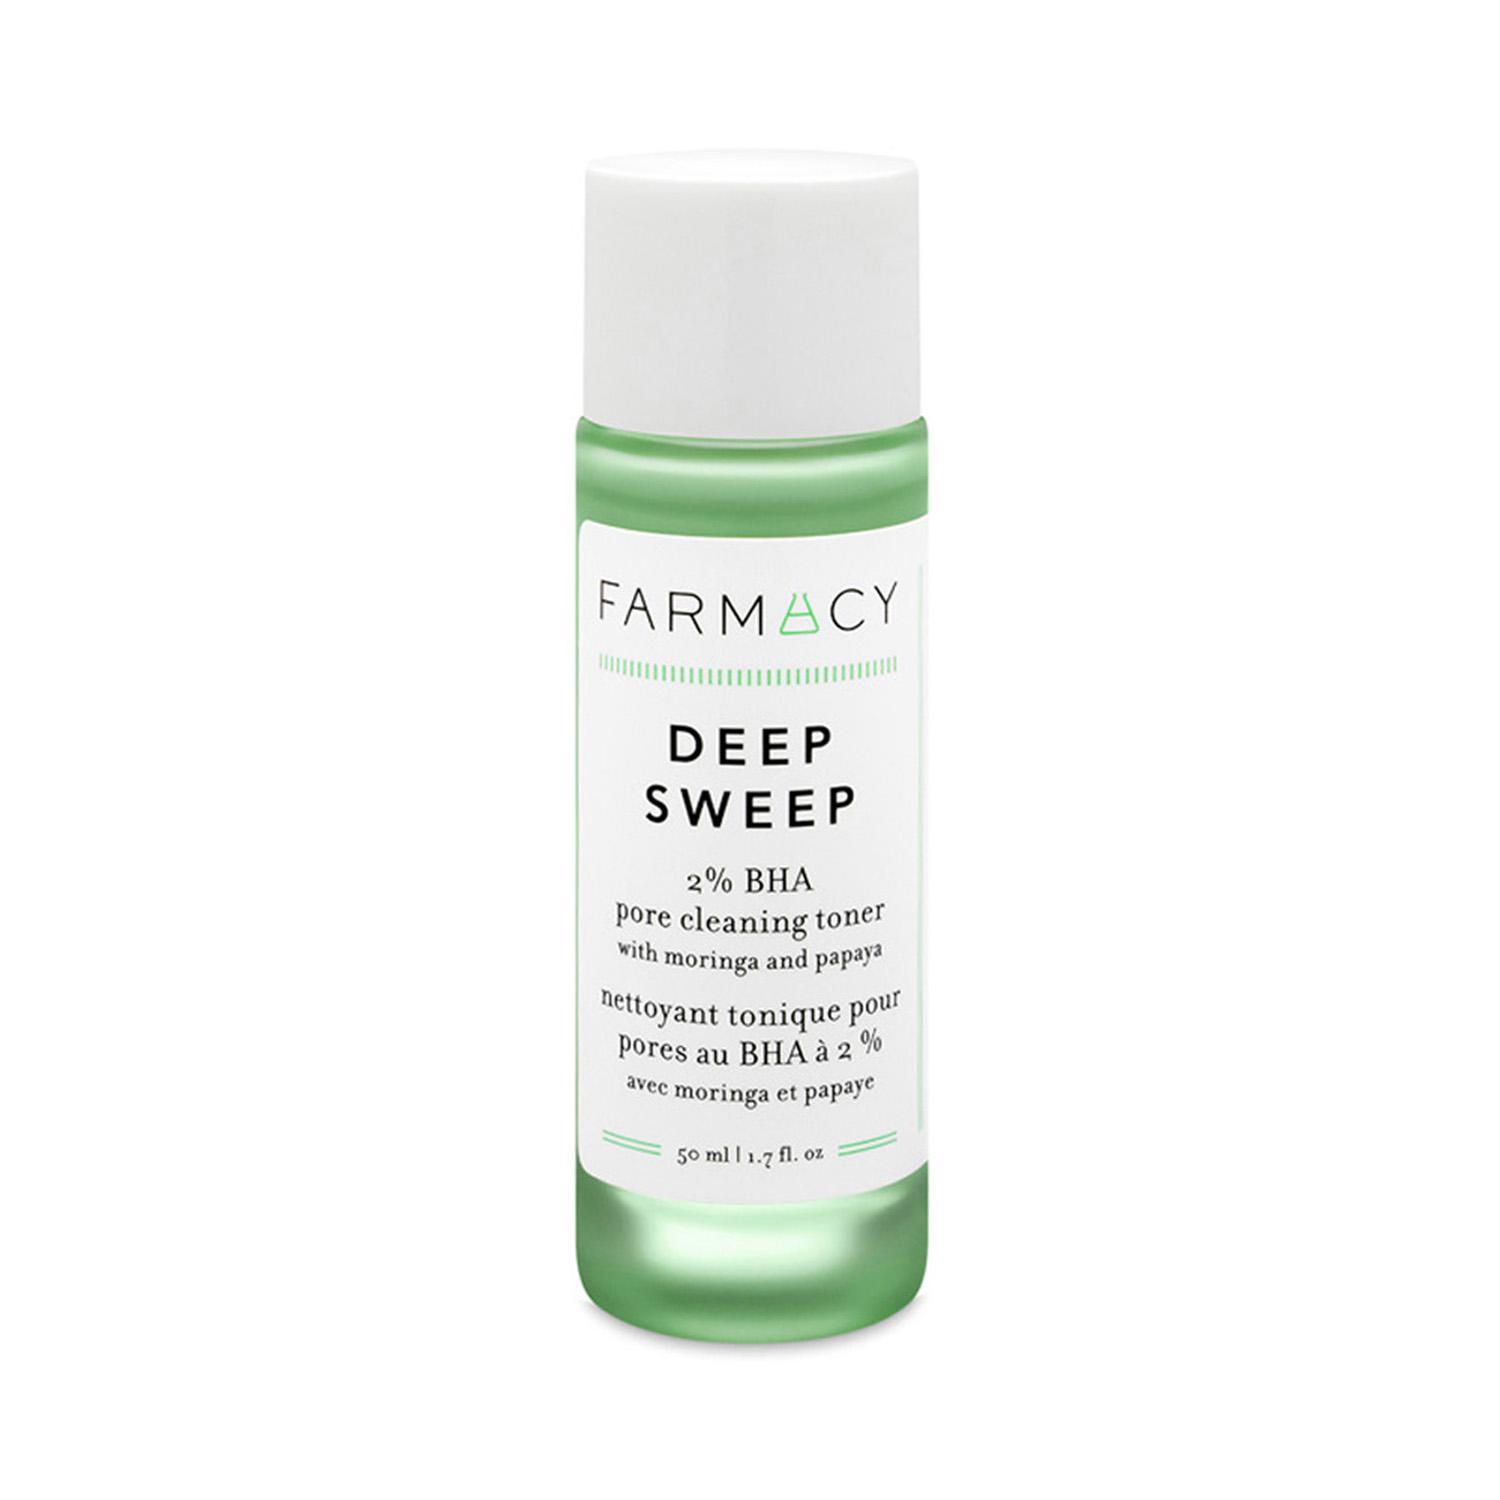 farmacy beauty deep sweep 2% bha pore cleaning toner (50ml)